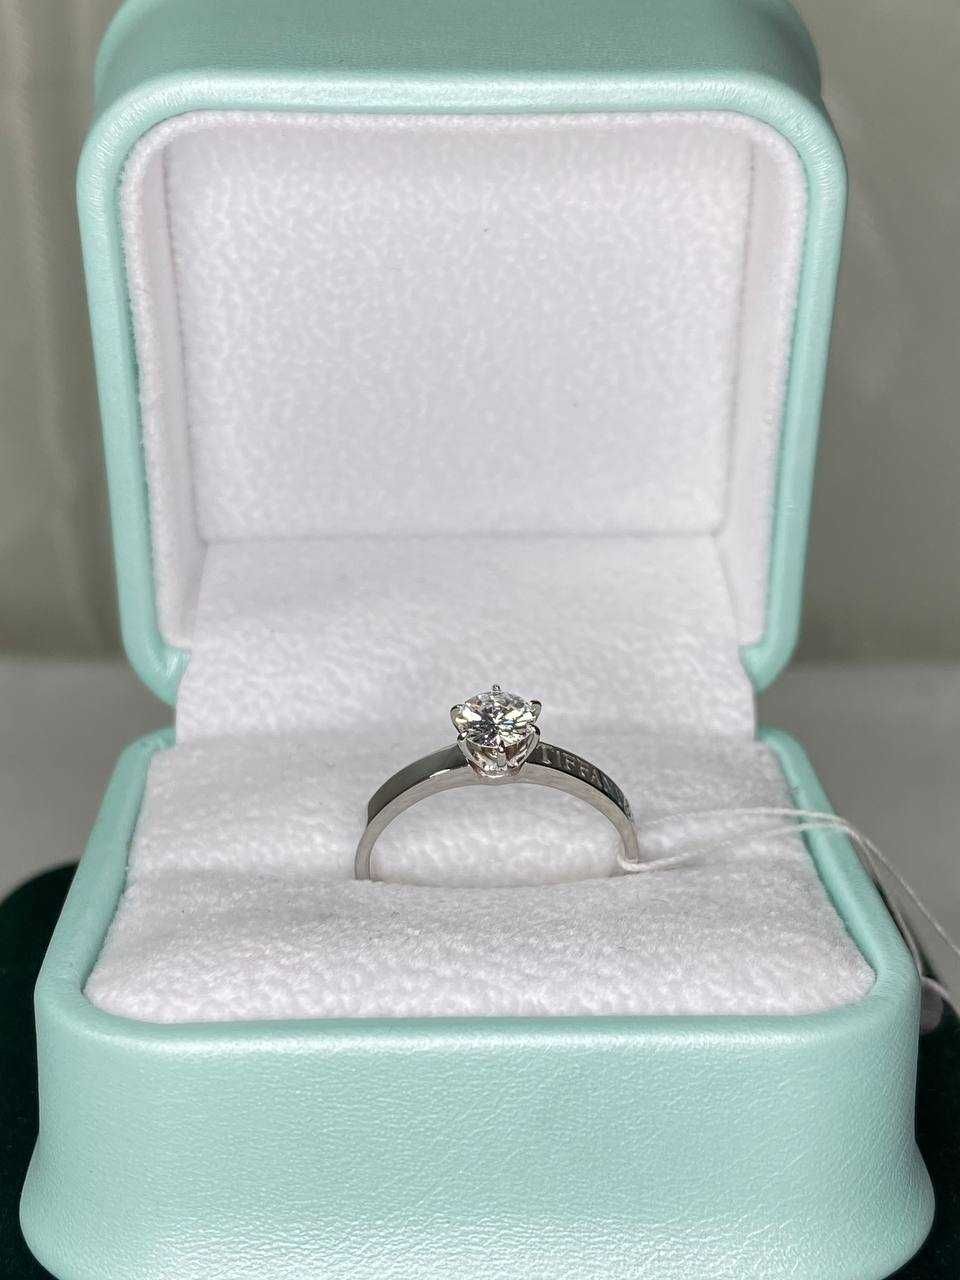 Золотое кольцо Tiffany с бриллиантом